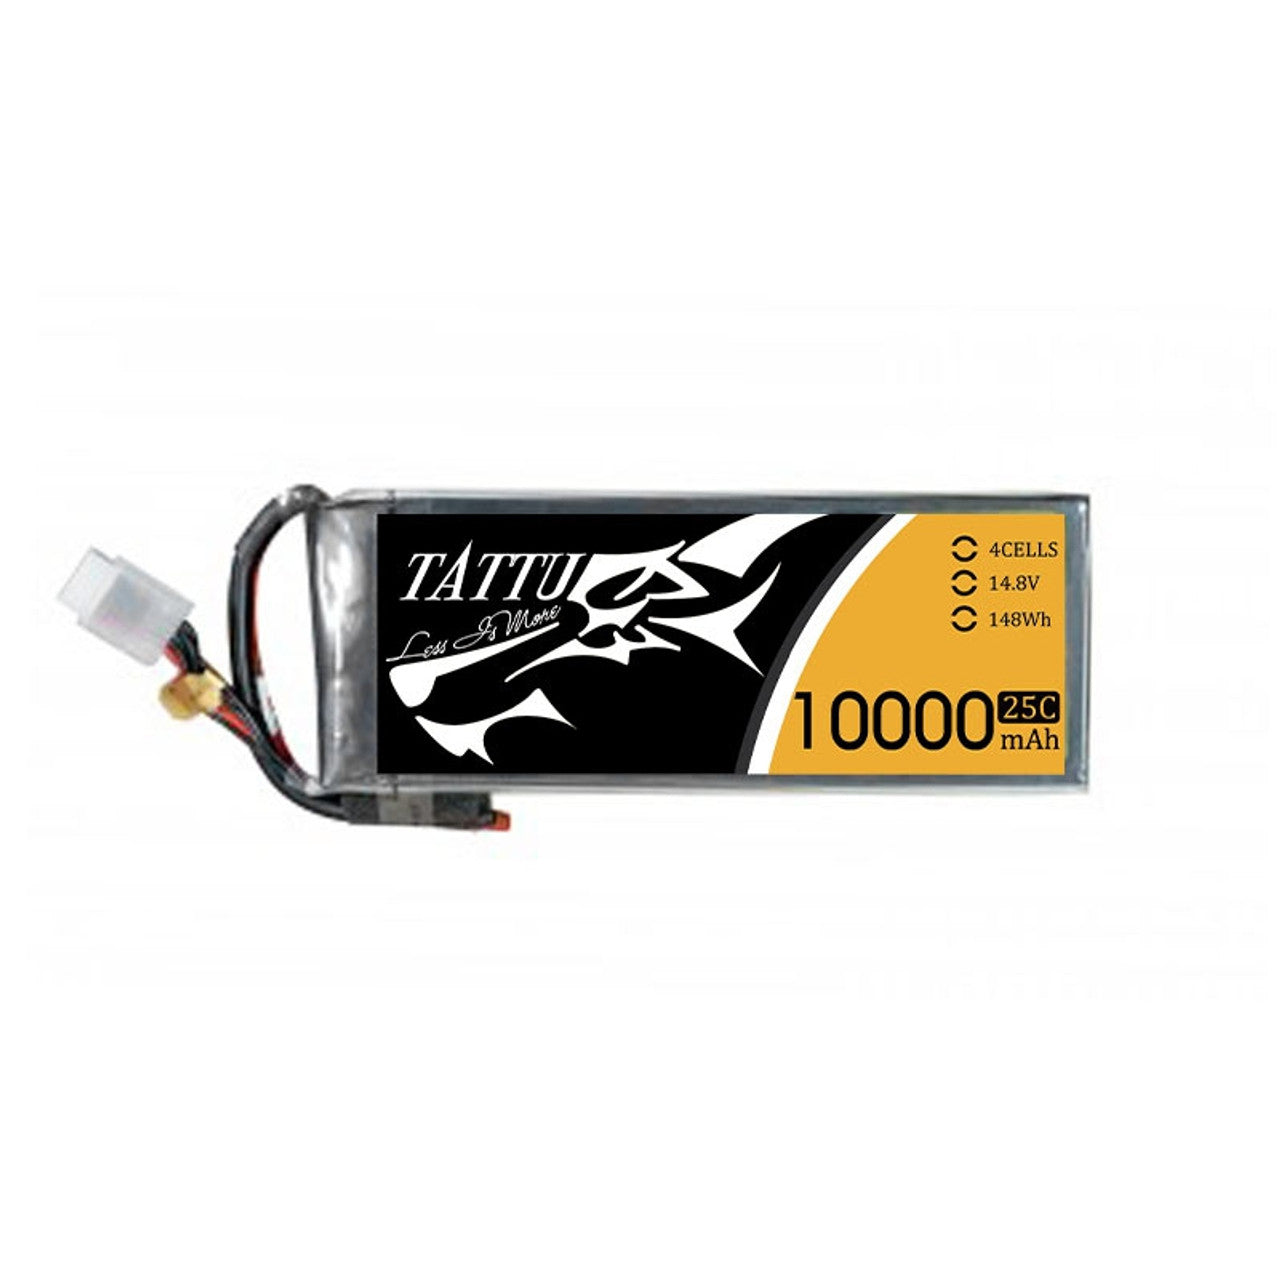 Tattu 4S 10000mAh 14.8V 25C Lipo Battery, Tattu 4S battery pack with 10,000mAh capacity, 14.8V voltage, and 148Wh power.